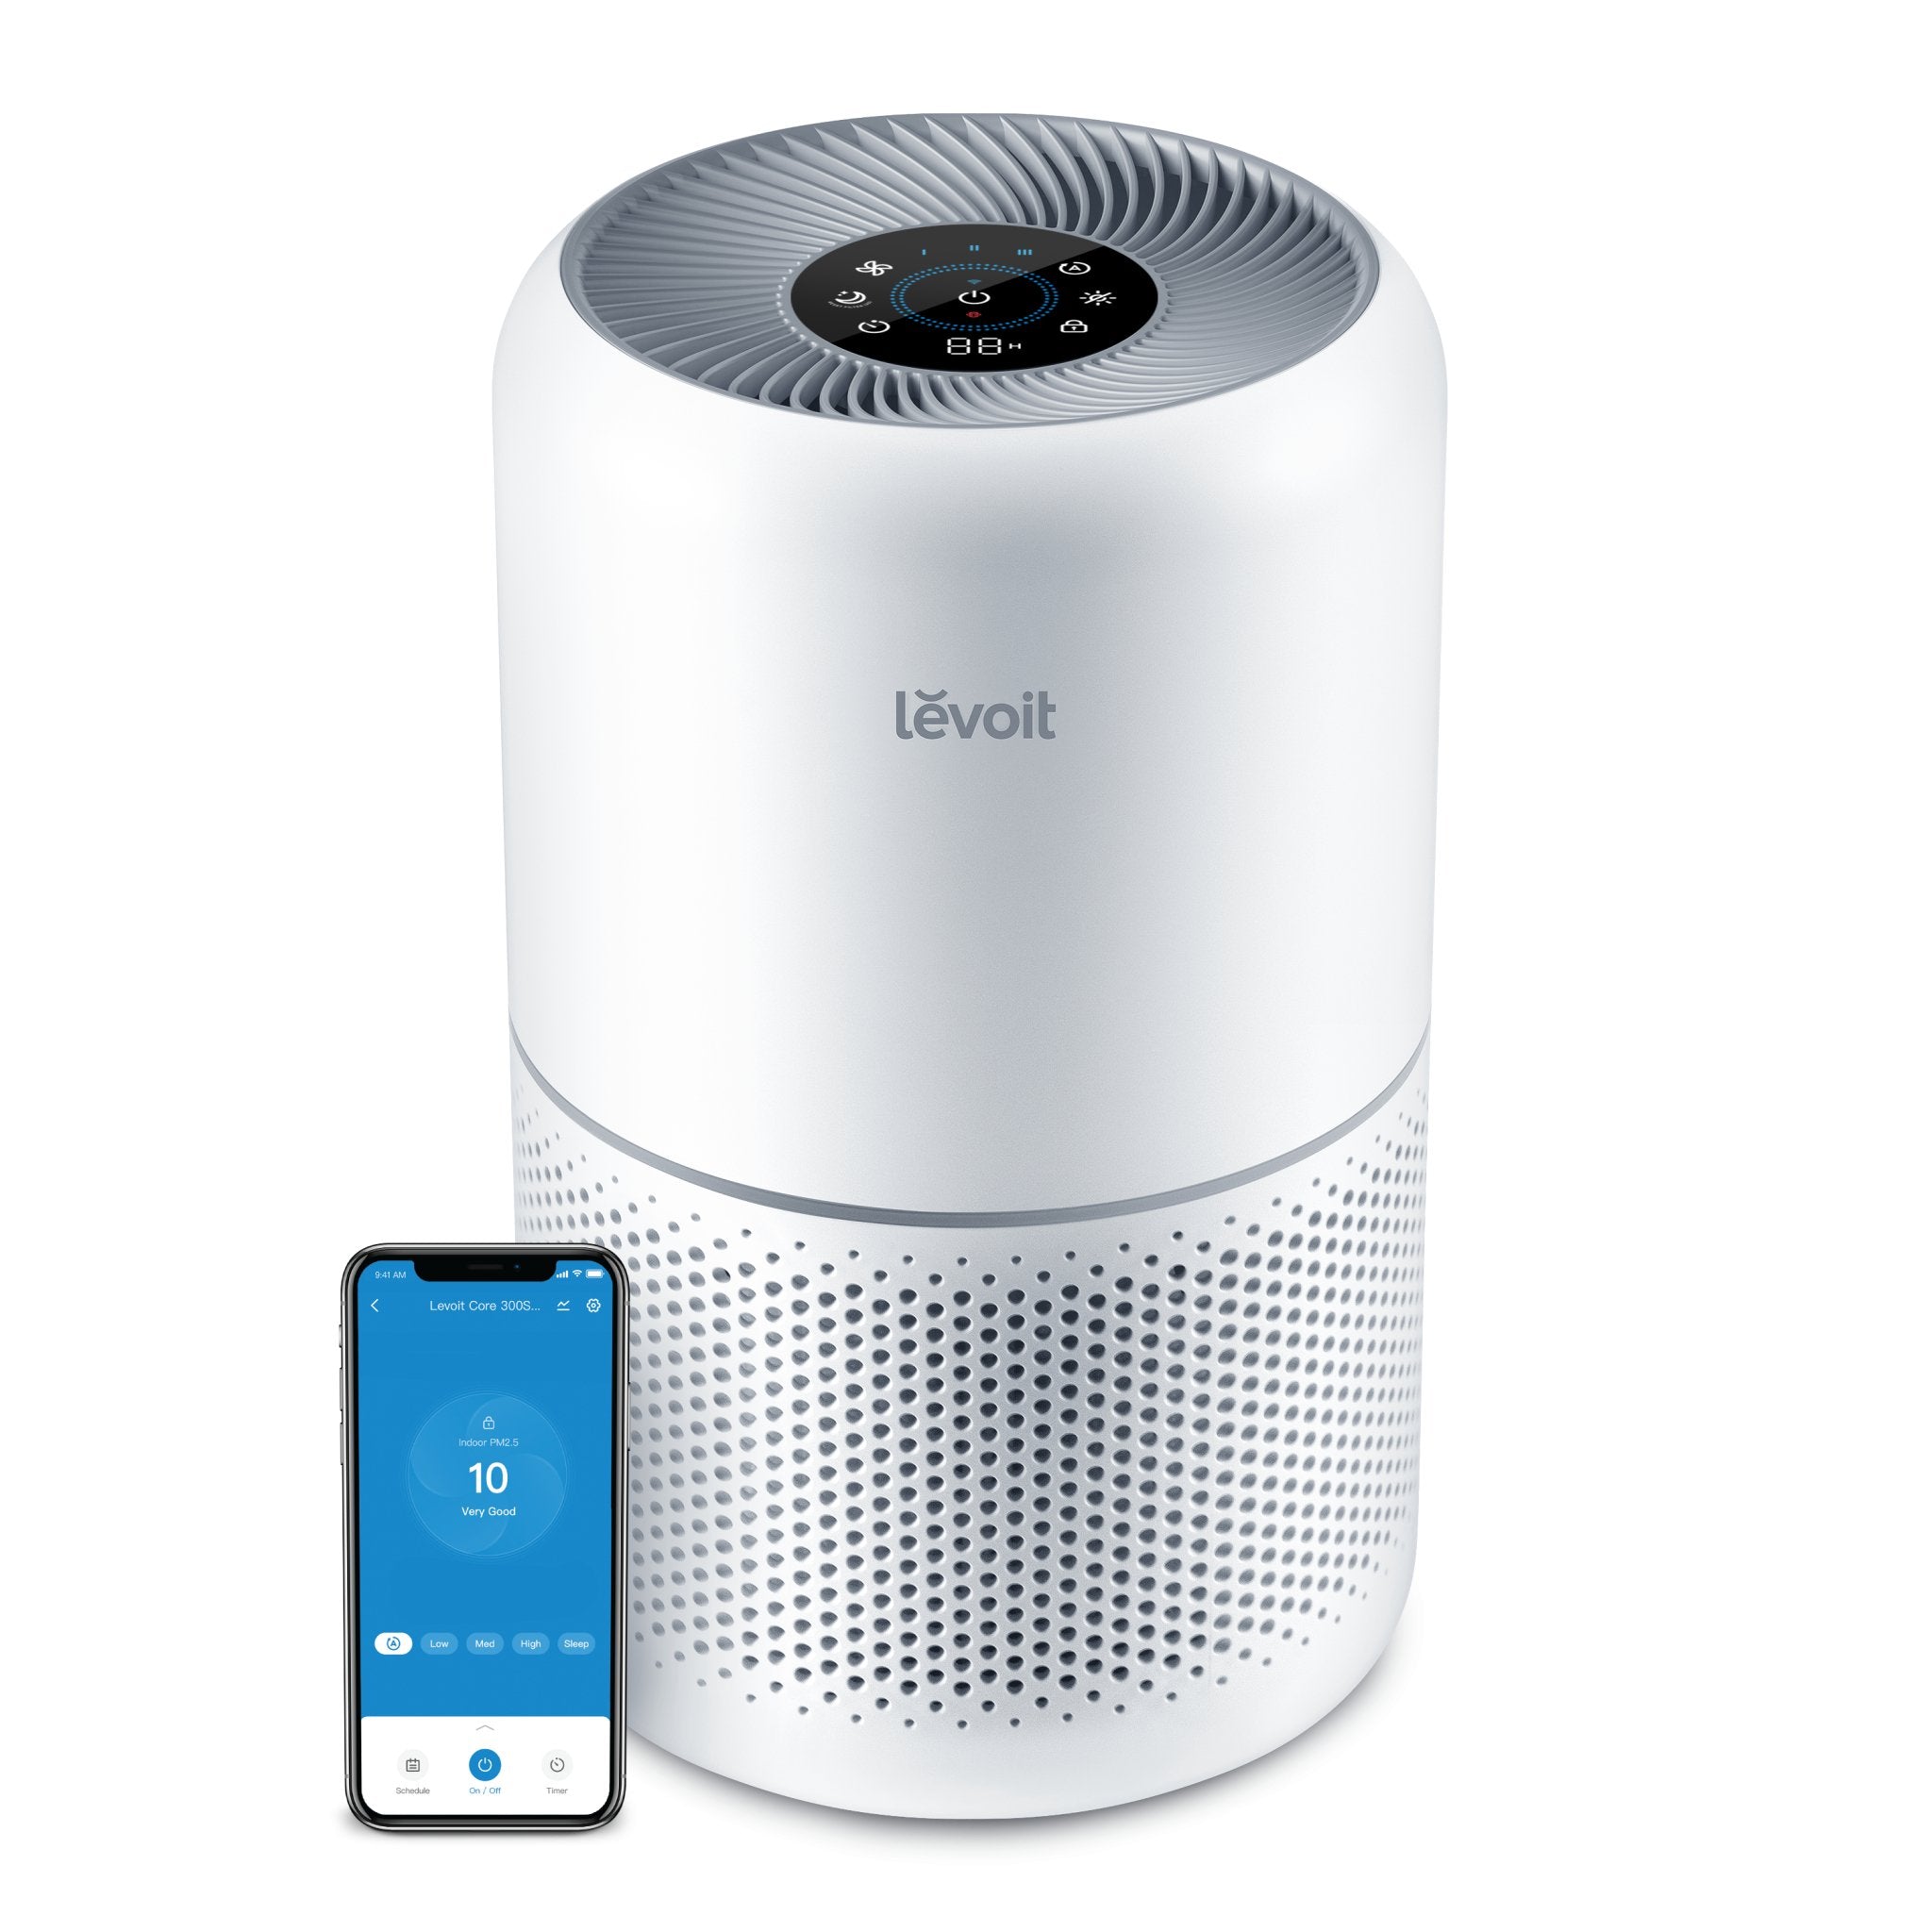 Live - LEVOIT CORE 300S Smart Wifi Air Purifier Review. Vs the 300?